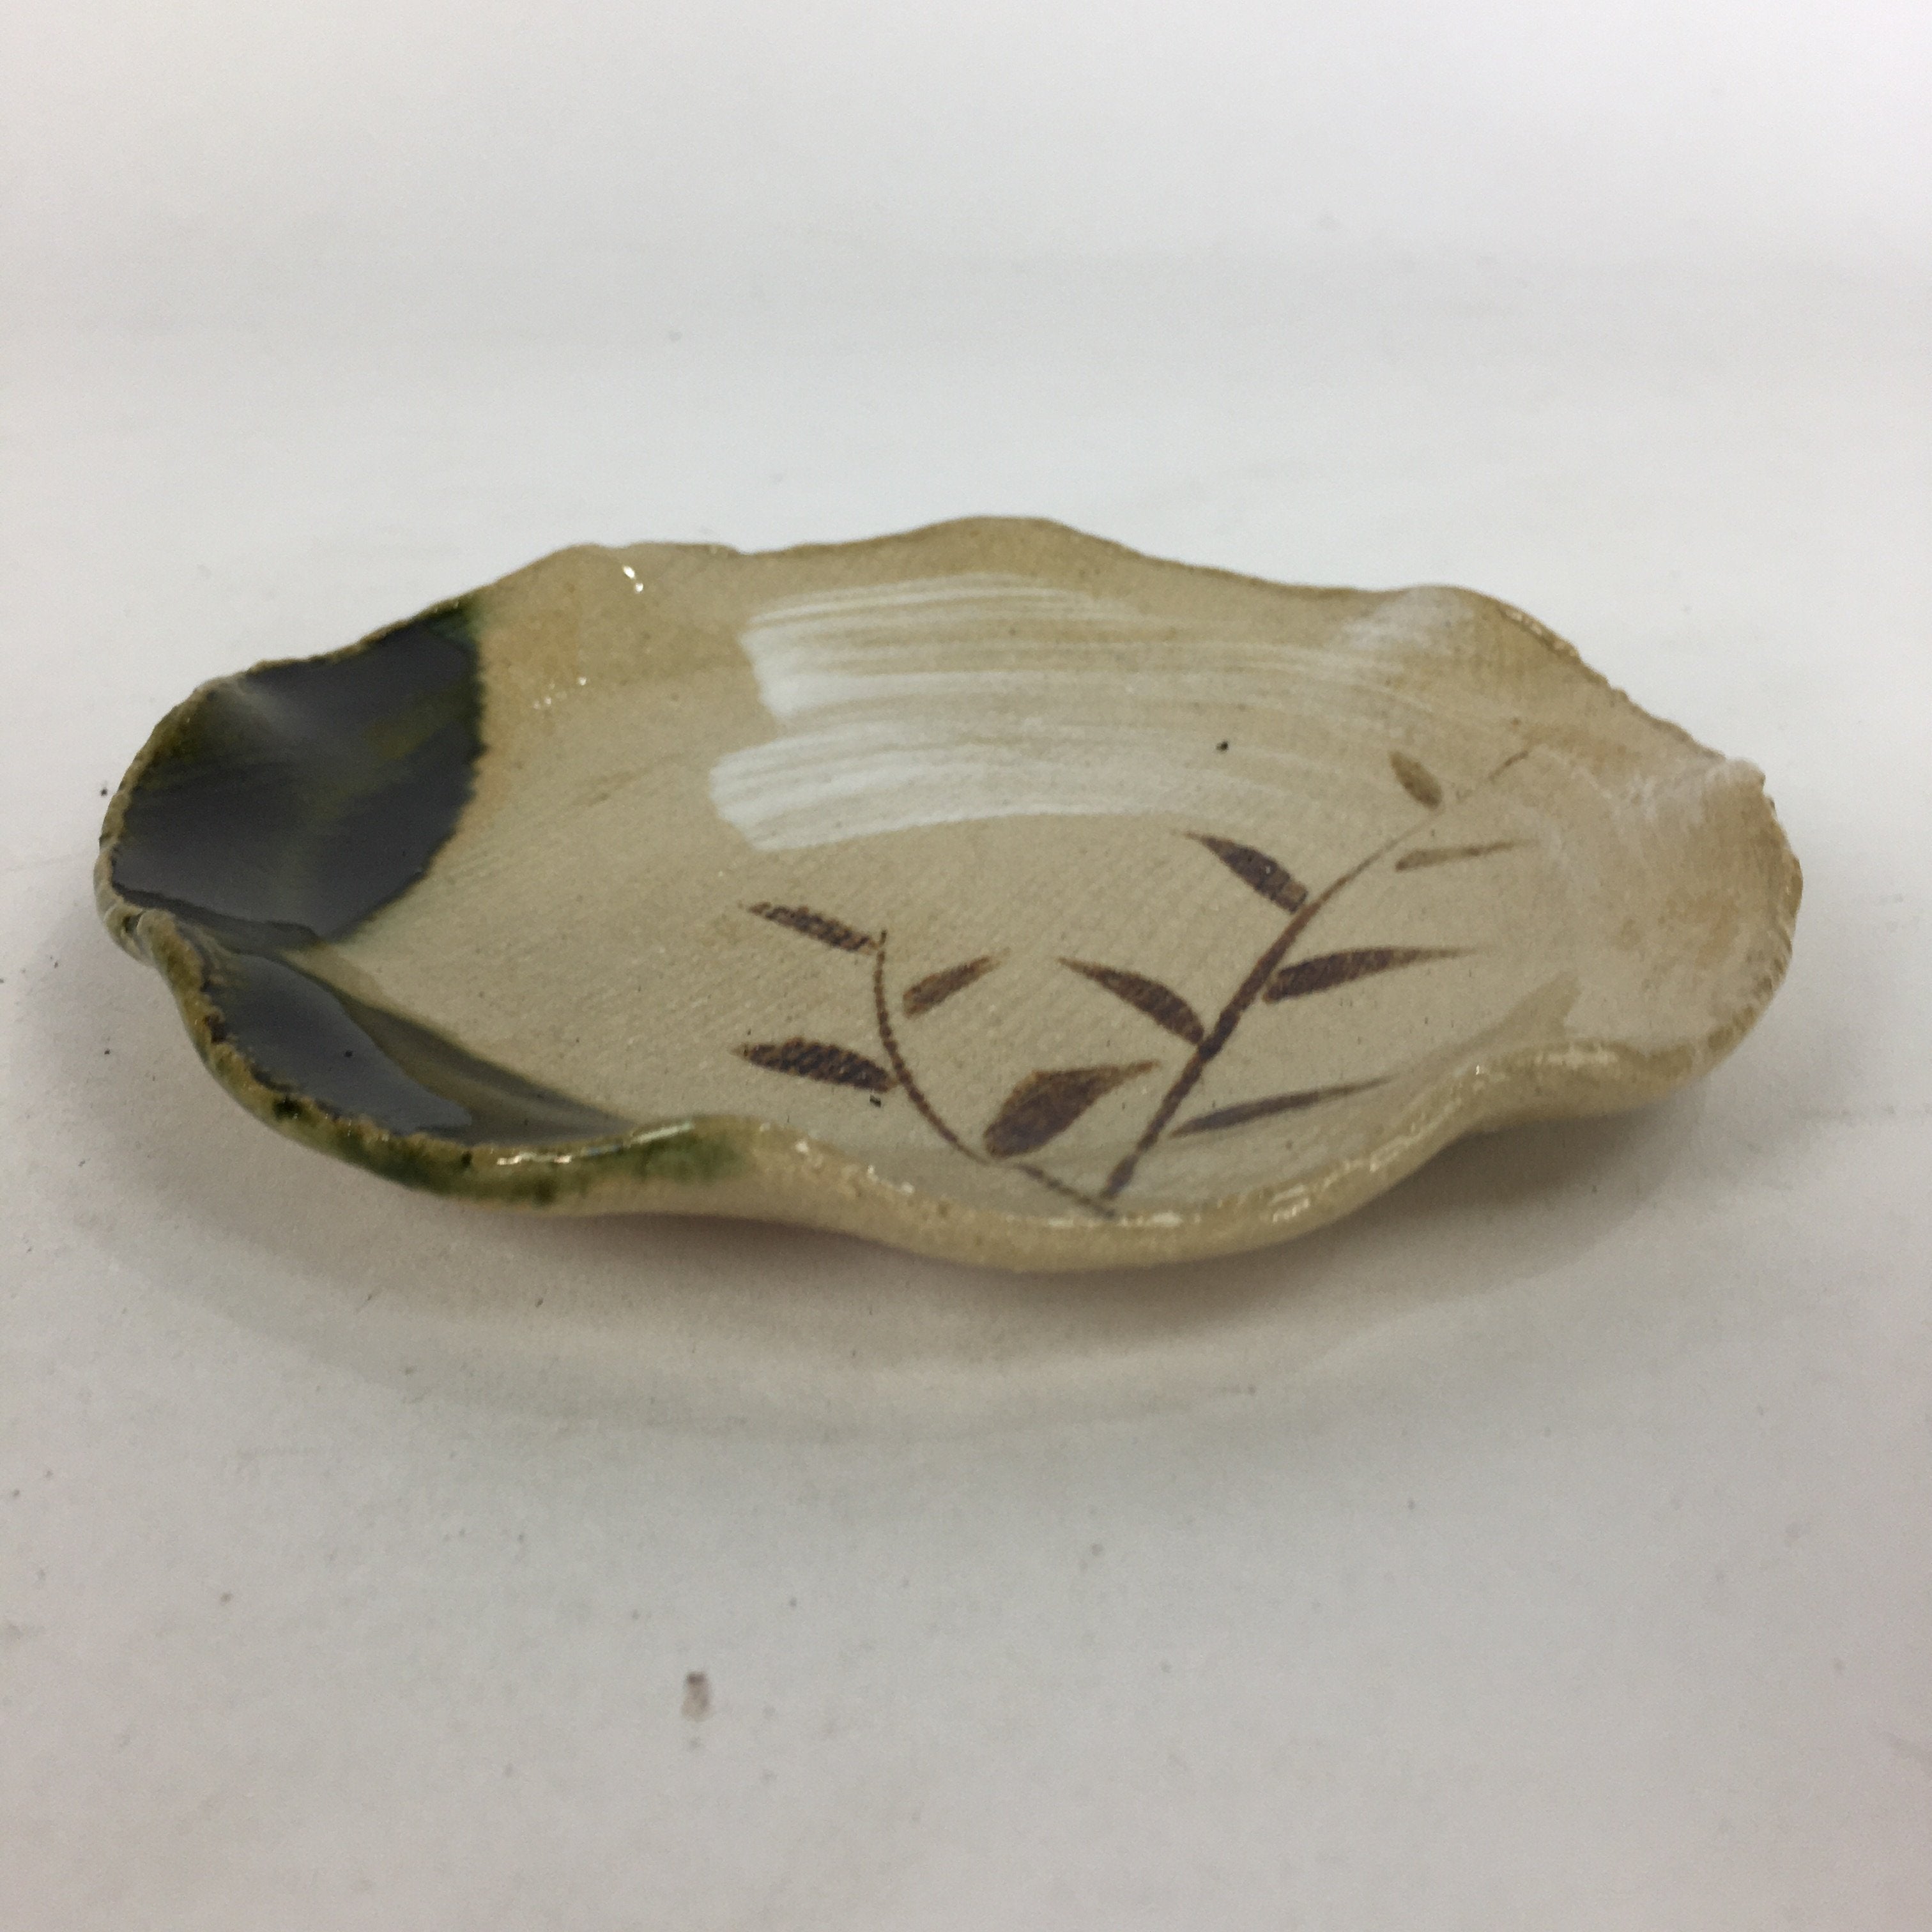 Japanese Ceramic Small Plate Oribe ware Kozara Vtg Round Pottery Bamboo PP626